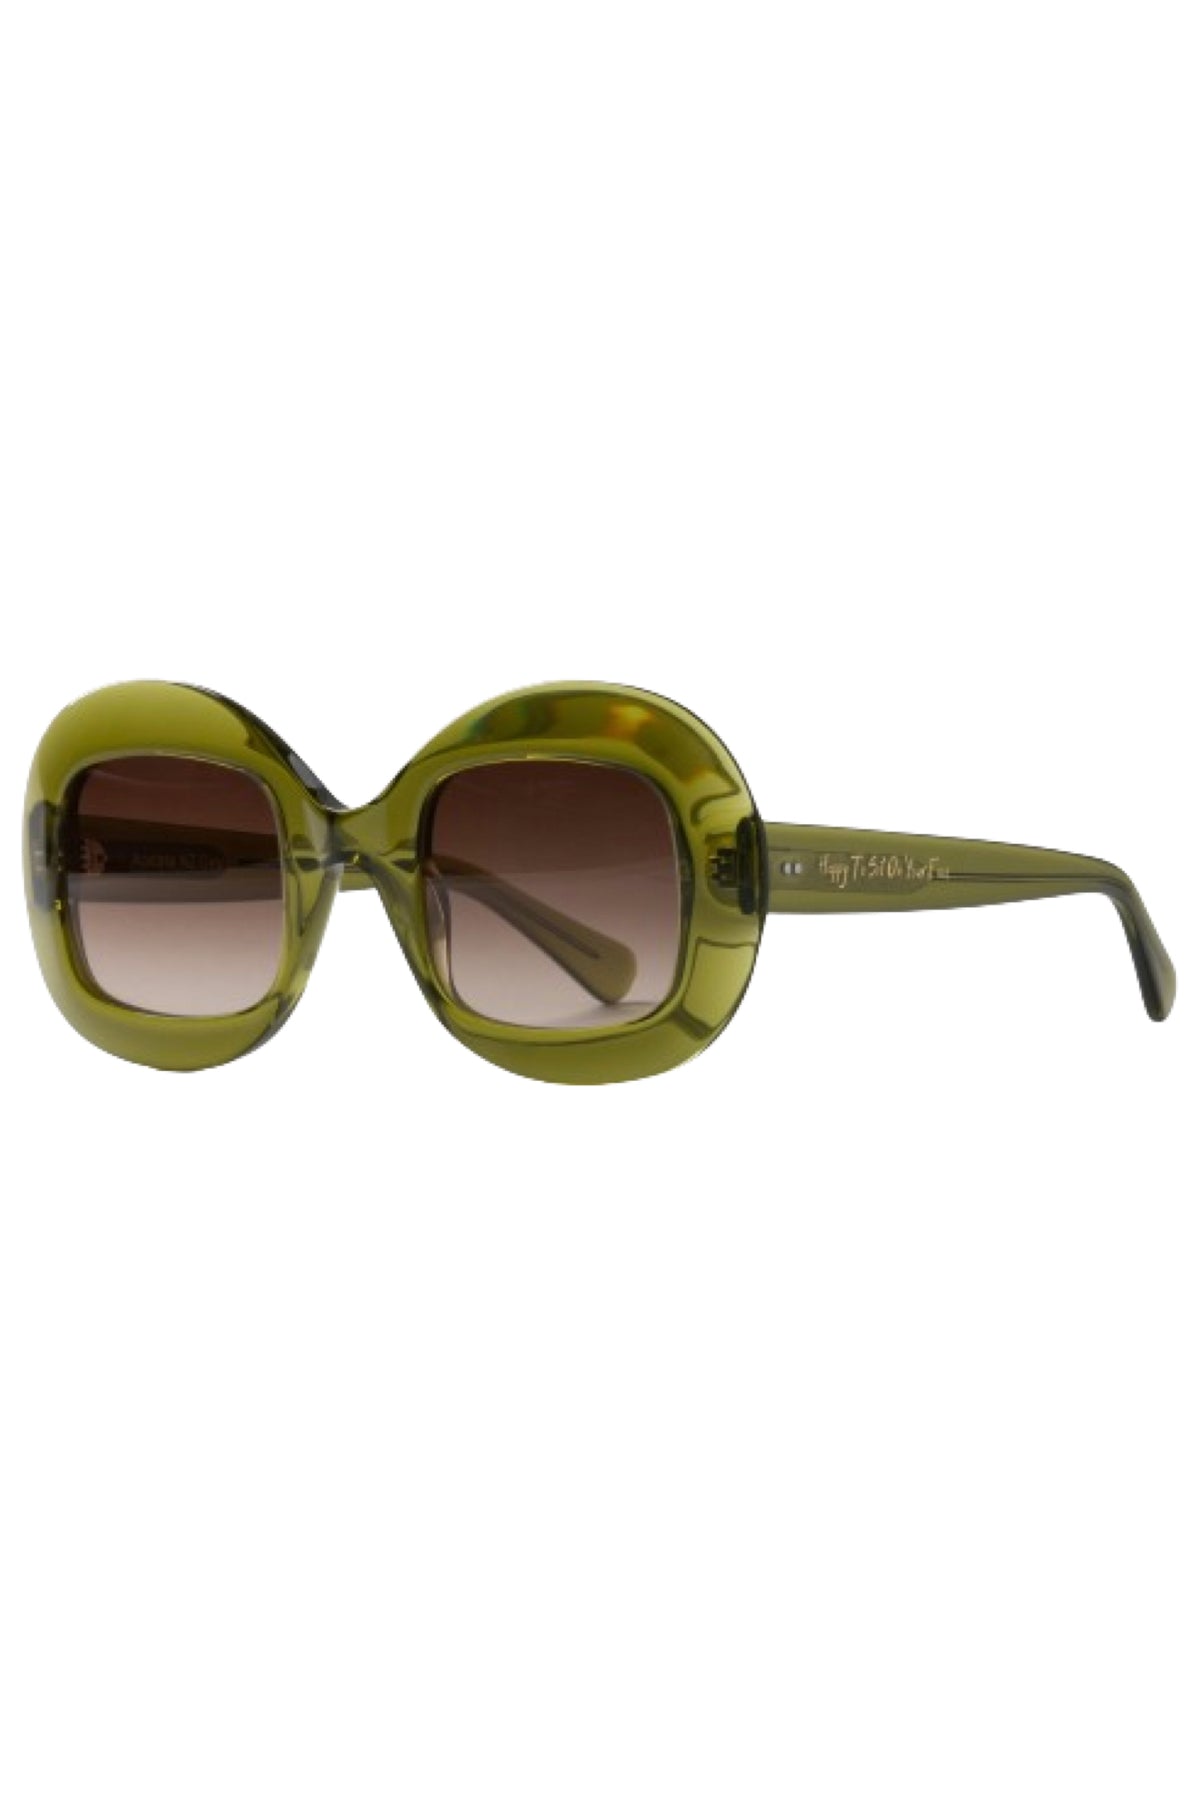 Discernment Olive Sunglasses